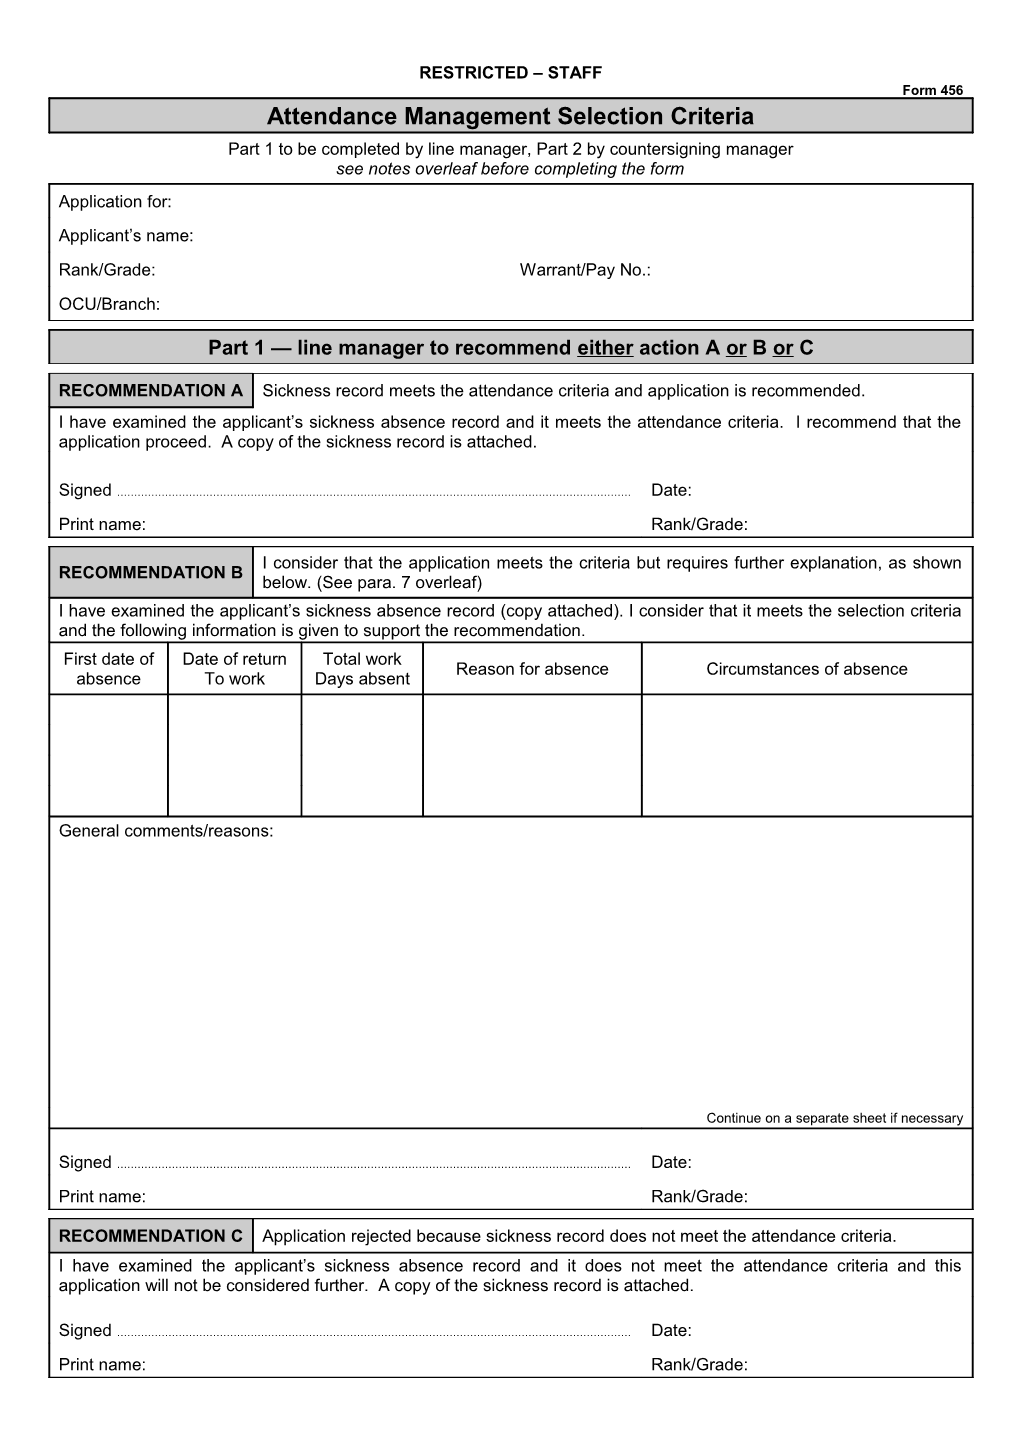 Form 456 - Attendance Management Selection Criteria